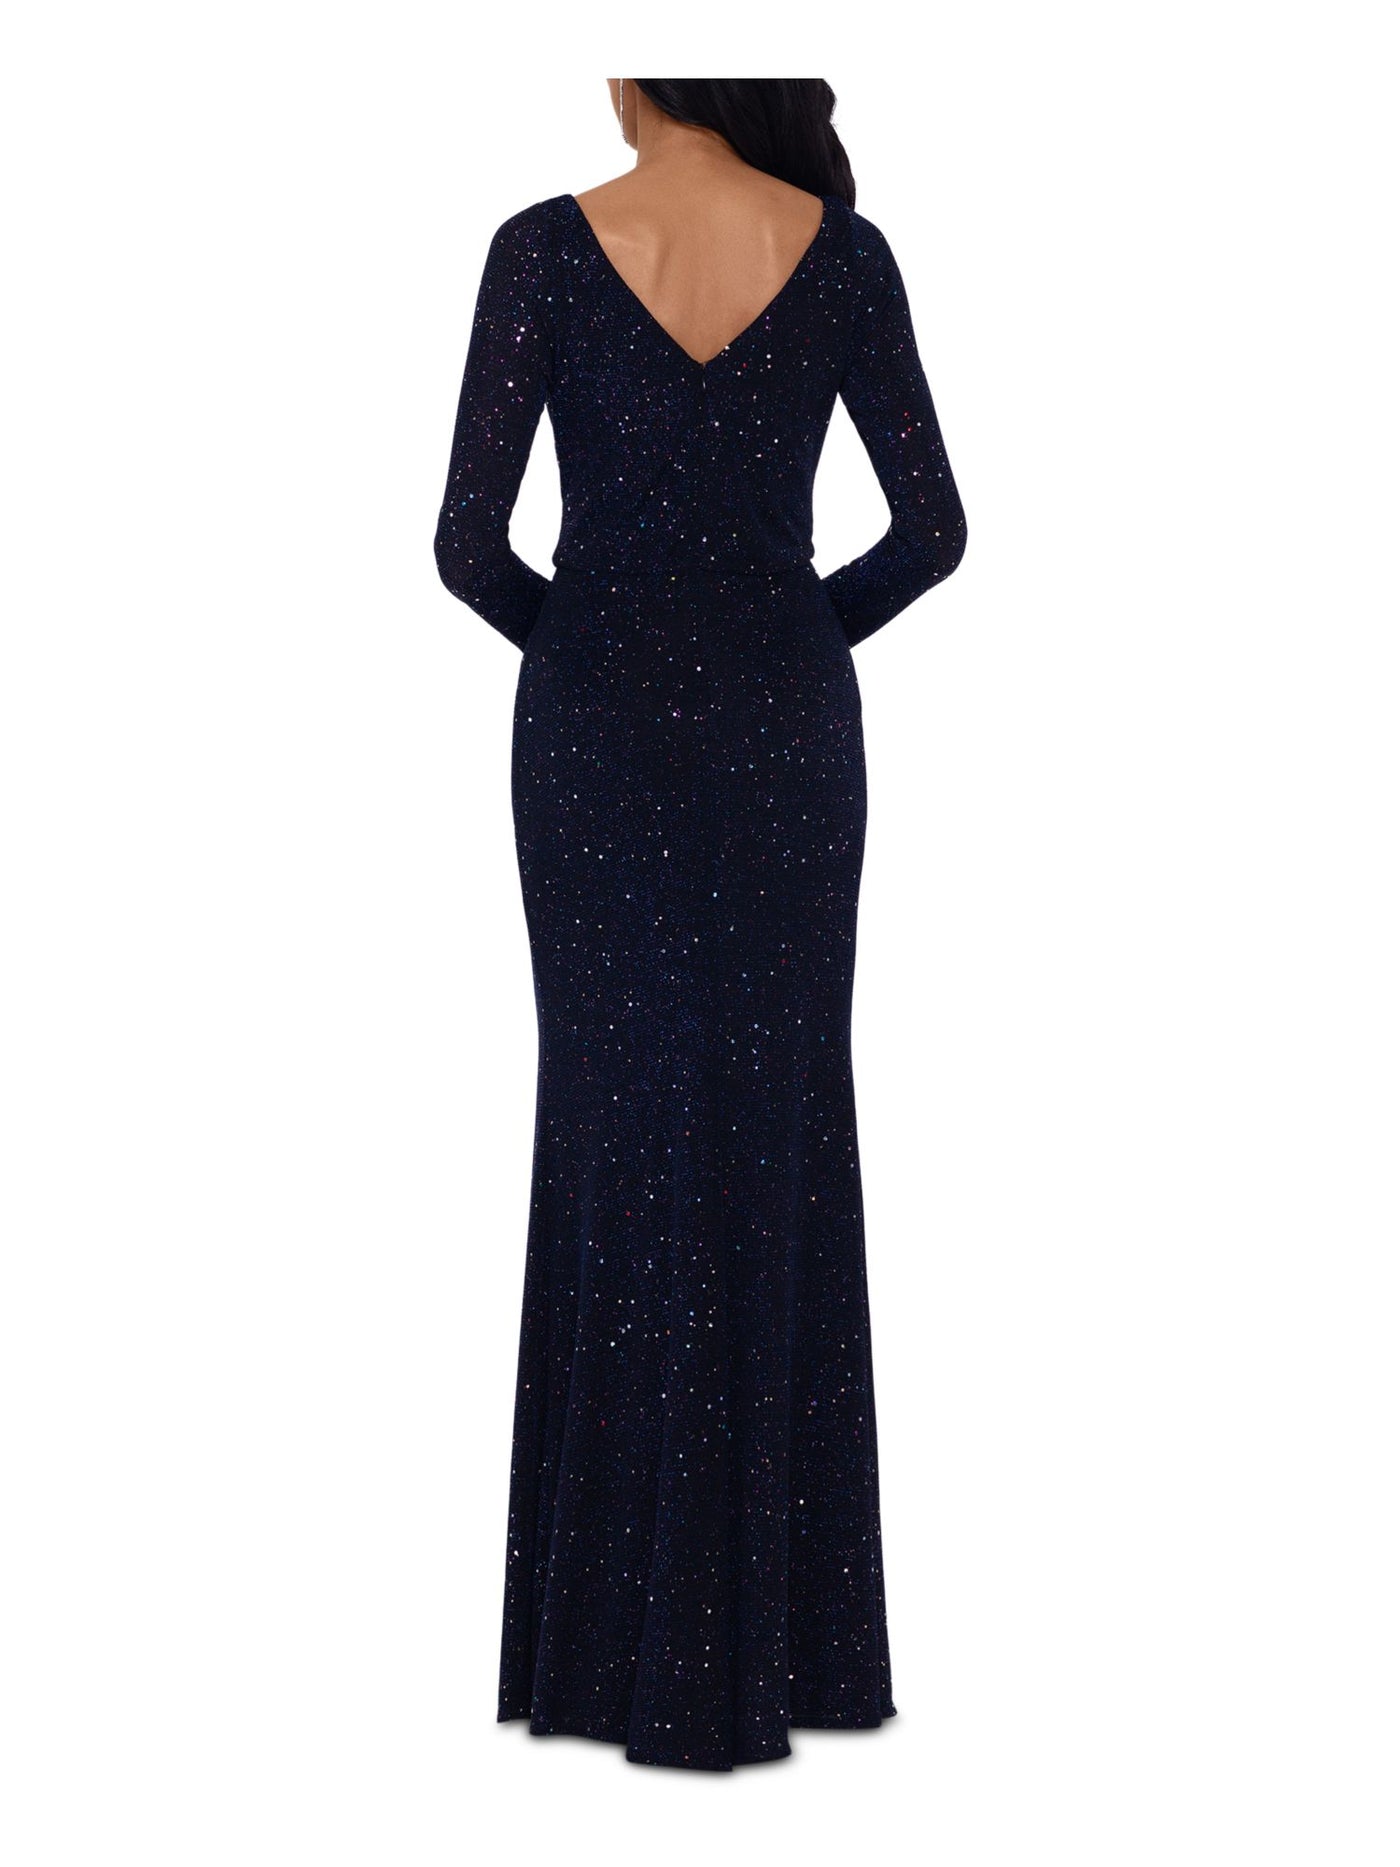 BETSY & ADAM Womens Navy Glitter Patterned Long Sleeve Jewel Neck Full-Length Evening Body Con Dress 4